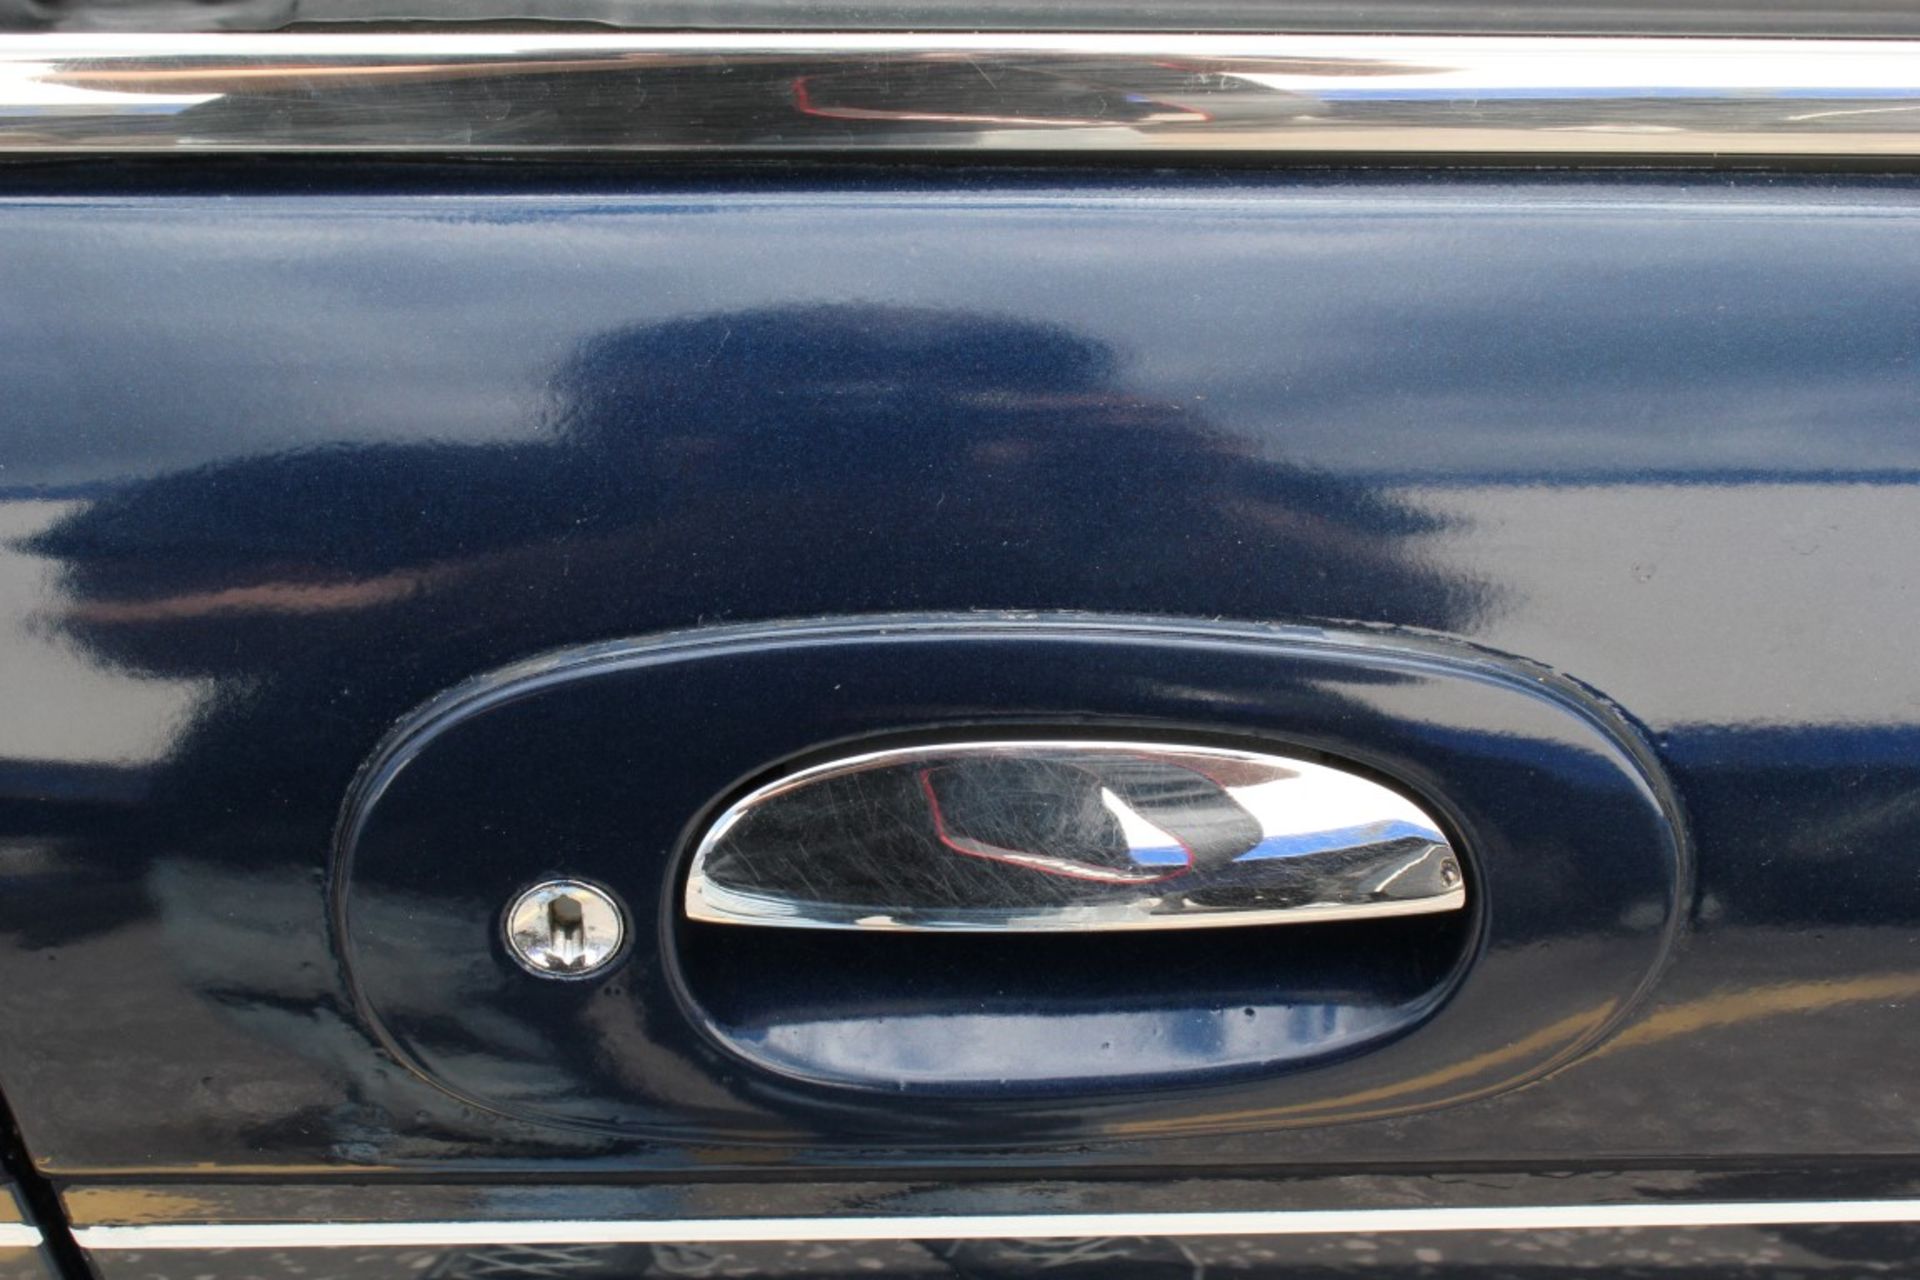 1 x Jaguar Daimler Super V8 Auto 4-Door Saloon - Year 2001 - Blue - Odometer Reading 122,520 - MOT - Image 17 of 77